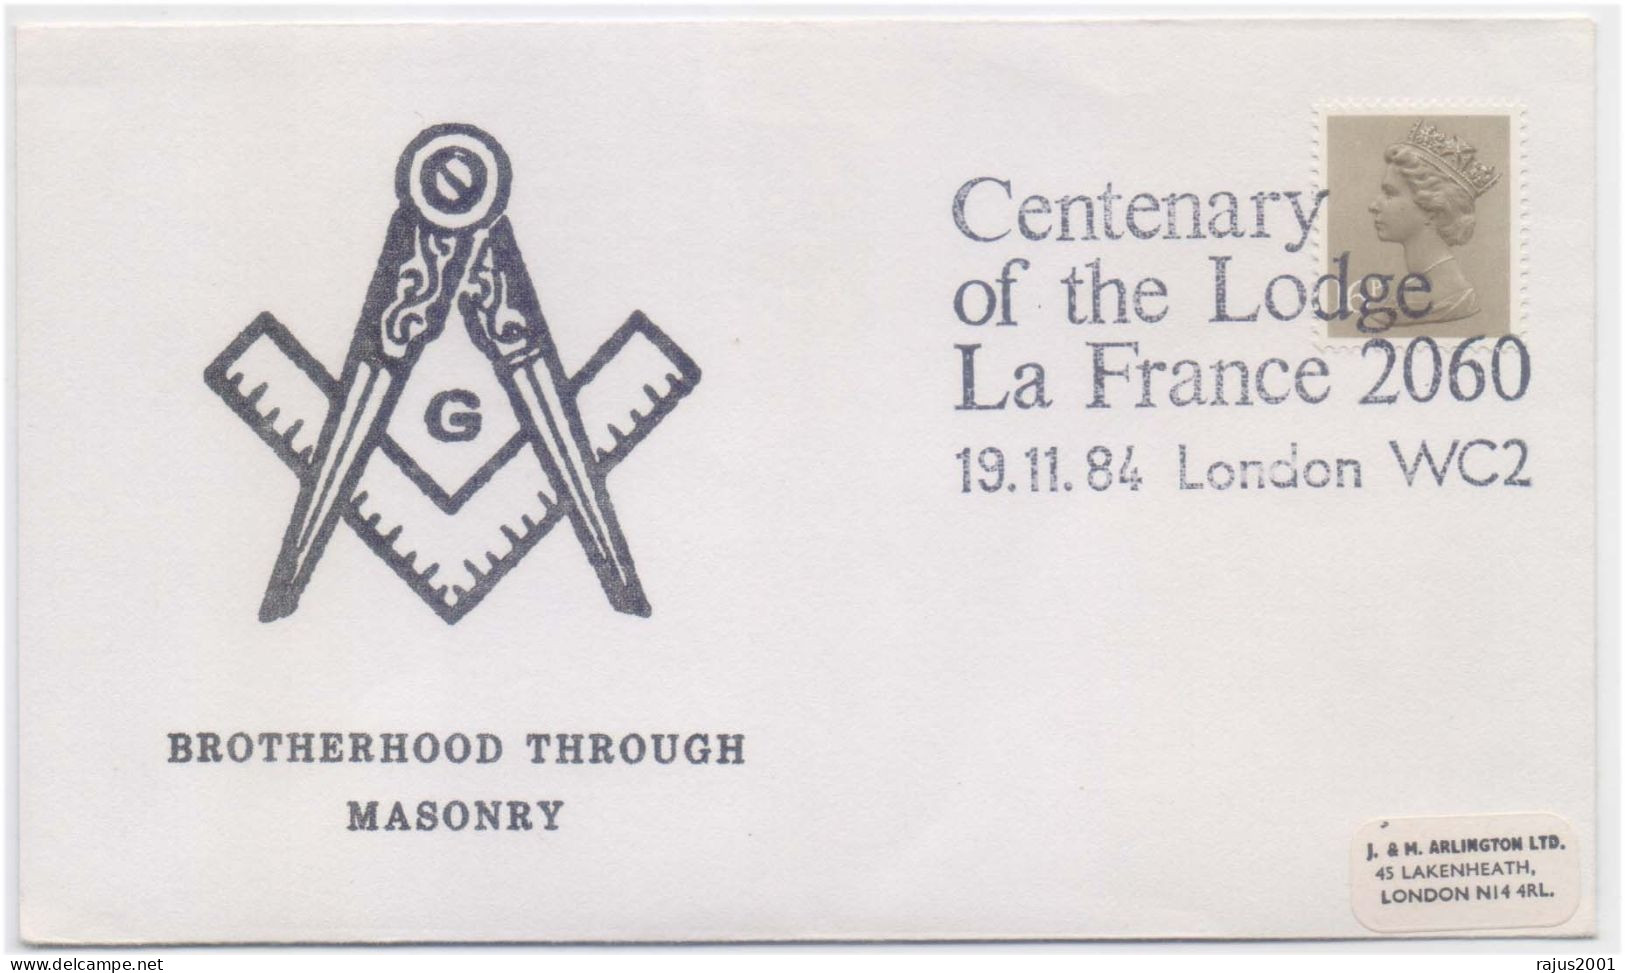 Centenary Of The Lodge Of France 2060, Brotherhood Through Masonry, Freemasonry, Masonic Britain FDC - Vrijmetselarij